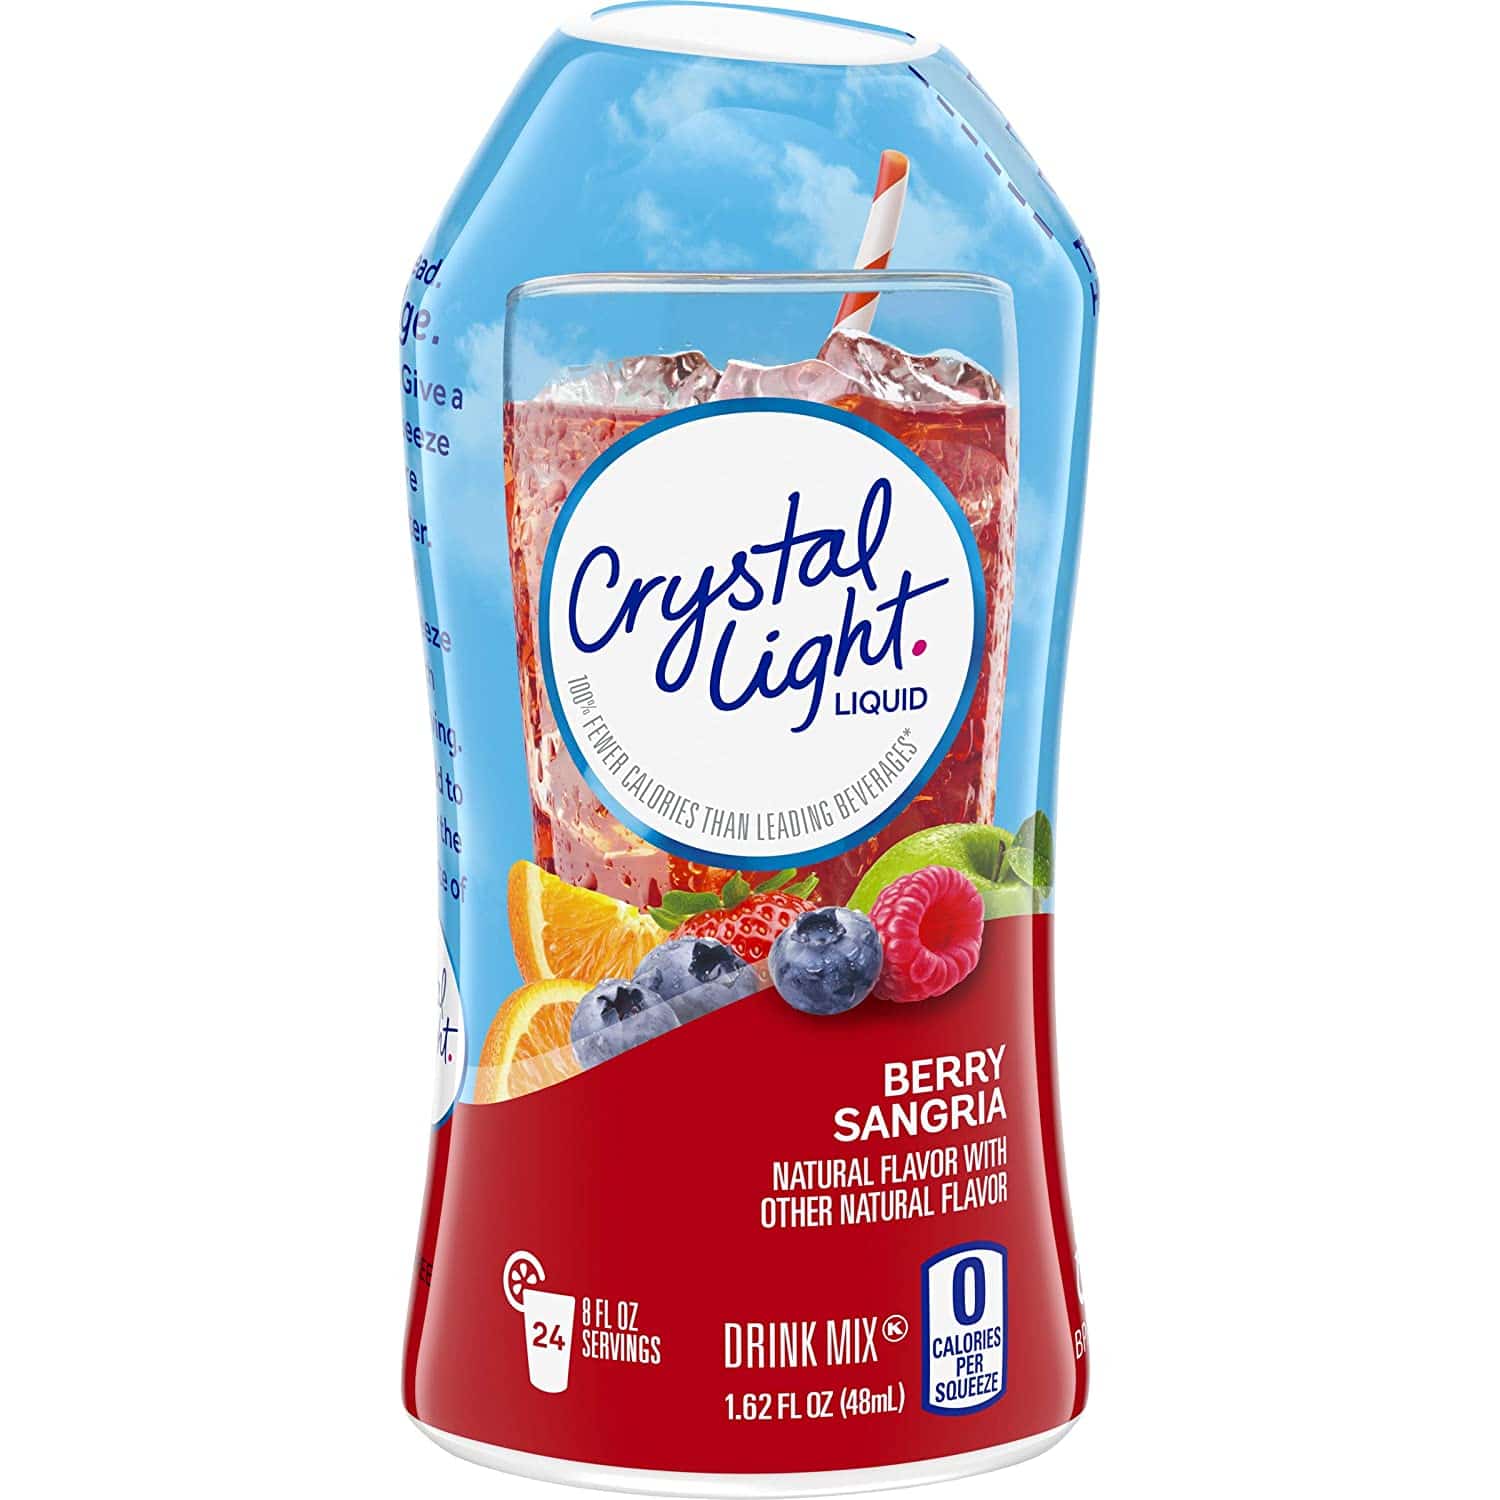 3. Crystal Light Liquid Berry Sangria Drink Mix